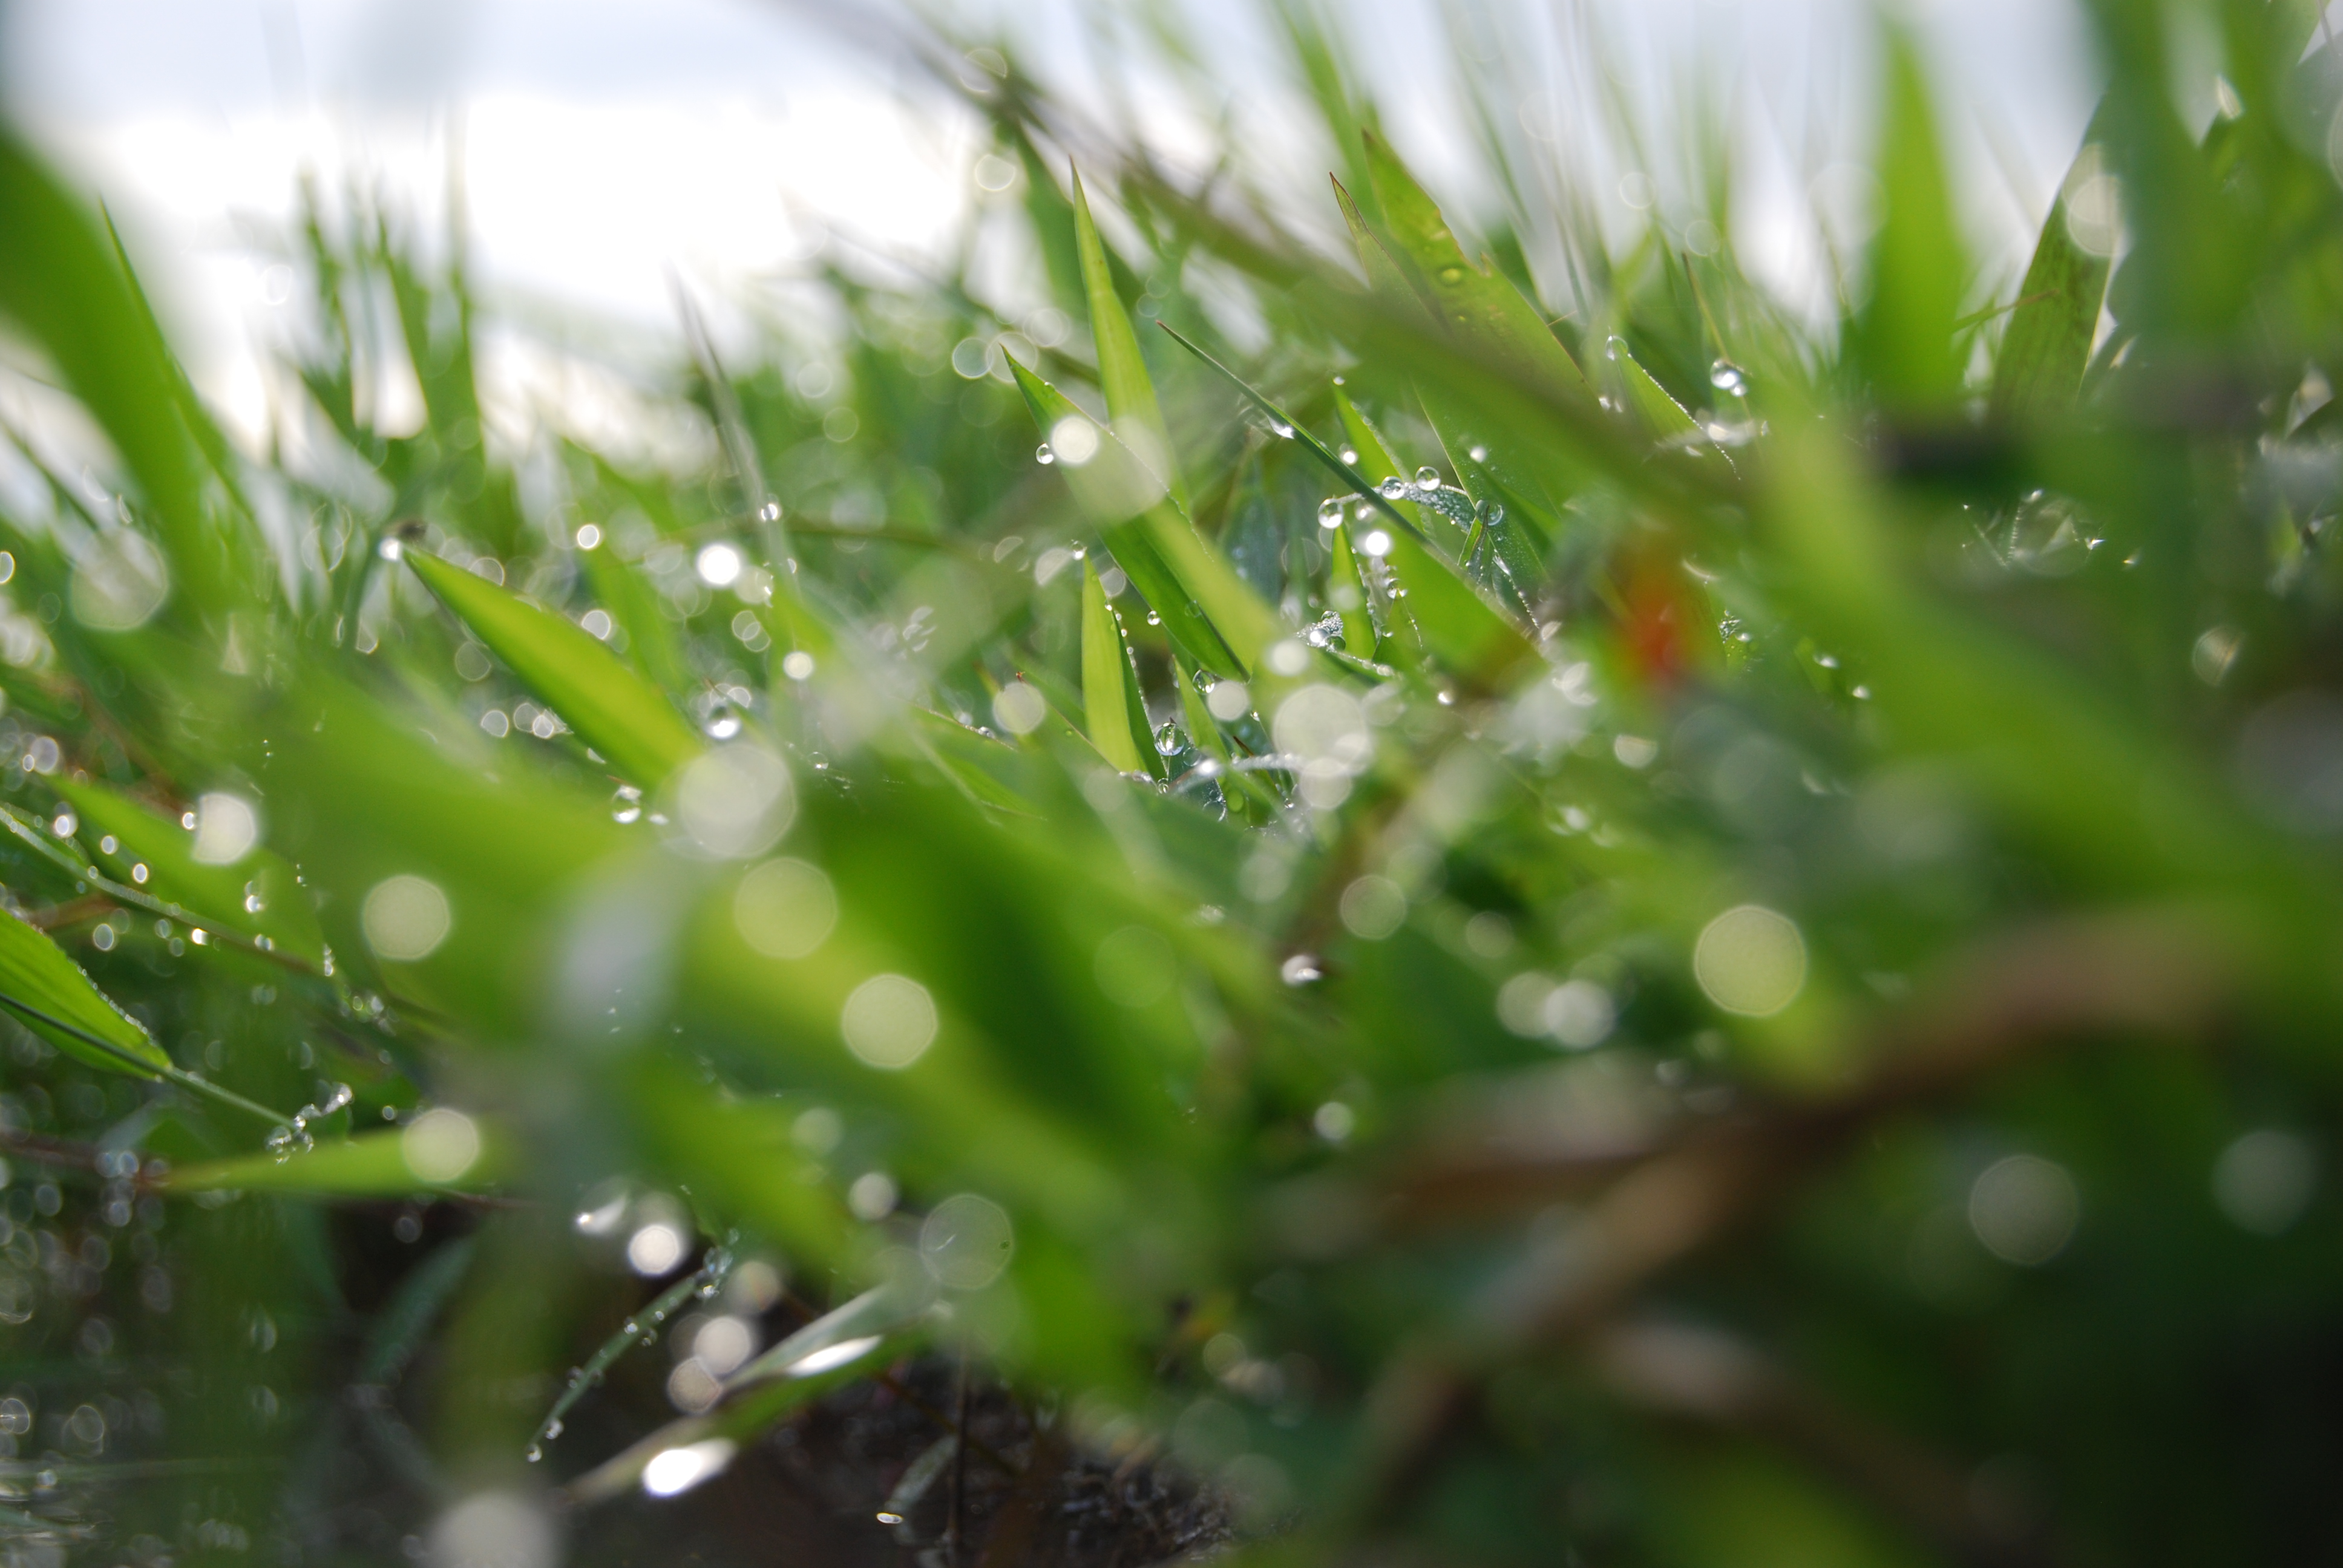 Wet grass, Blurry, Droplets, Fresh, Grass, HQ Photo